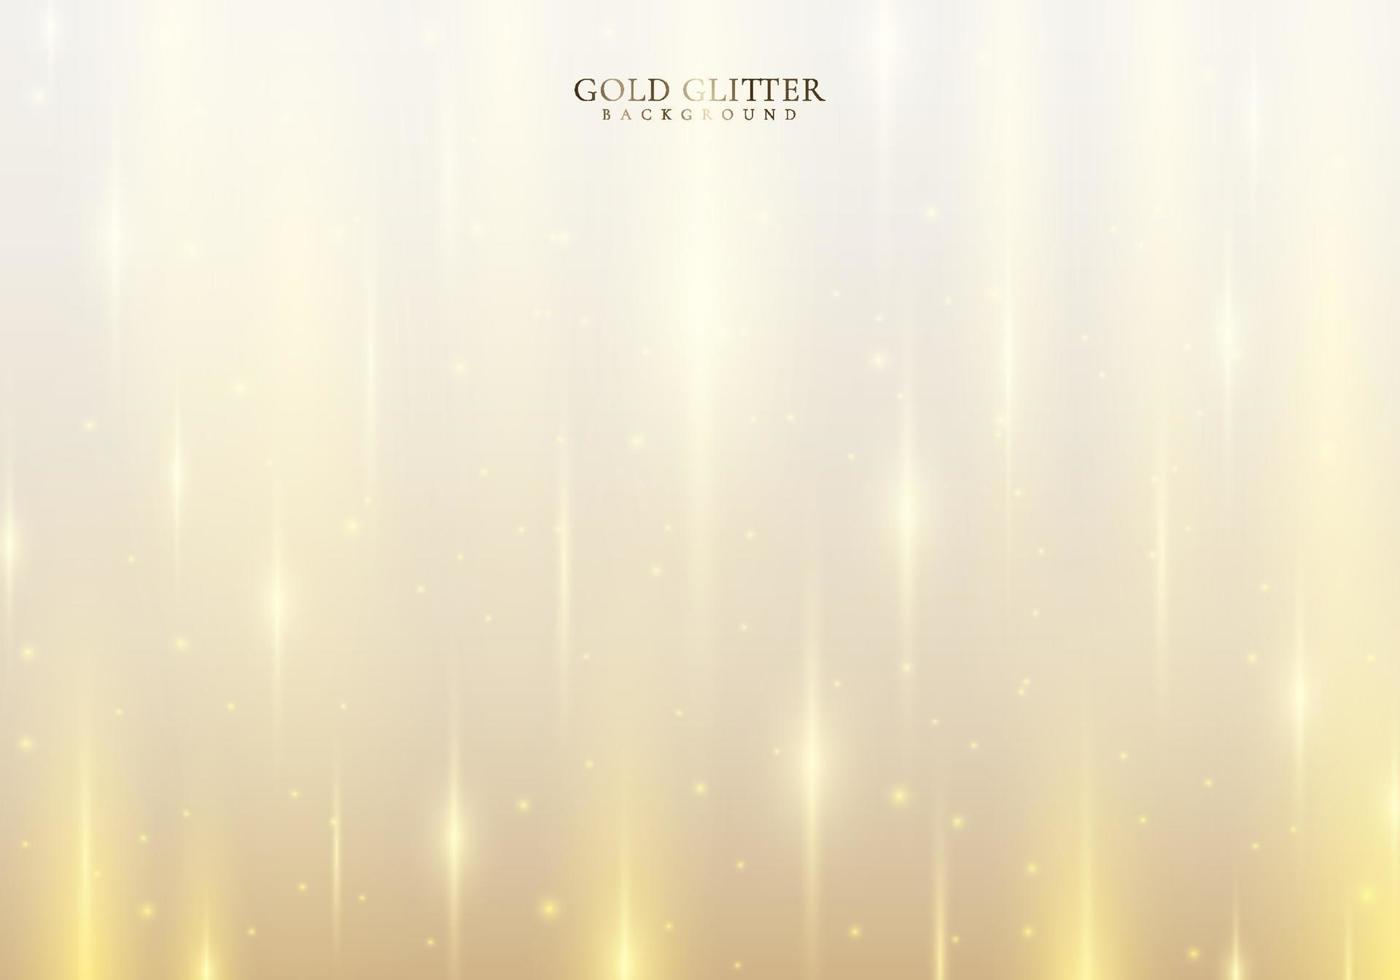 Golden glitter sparkling lights effect on gold background luxury style vector